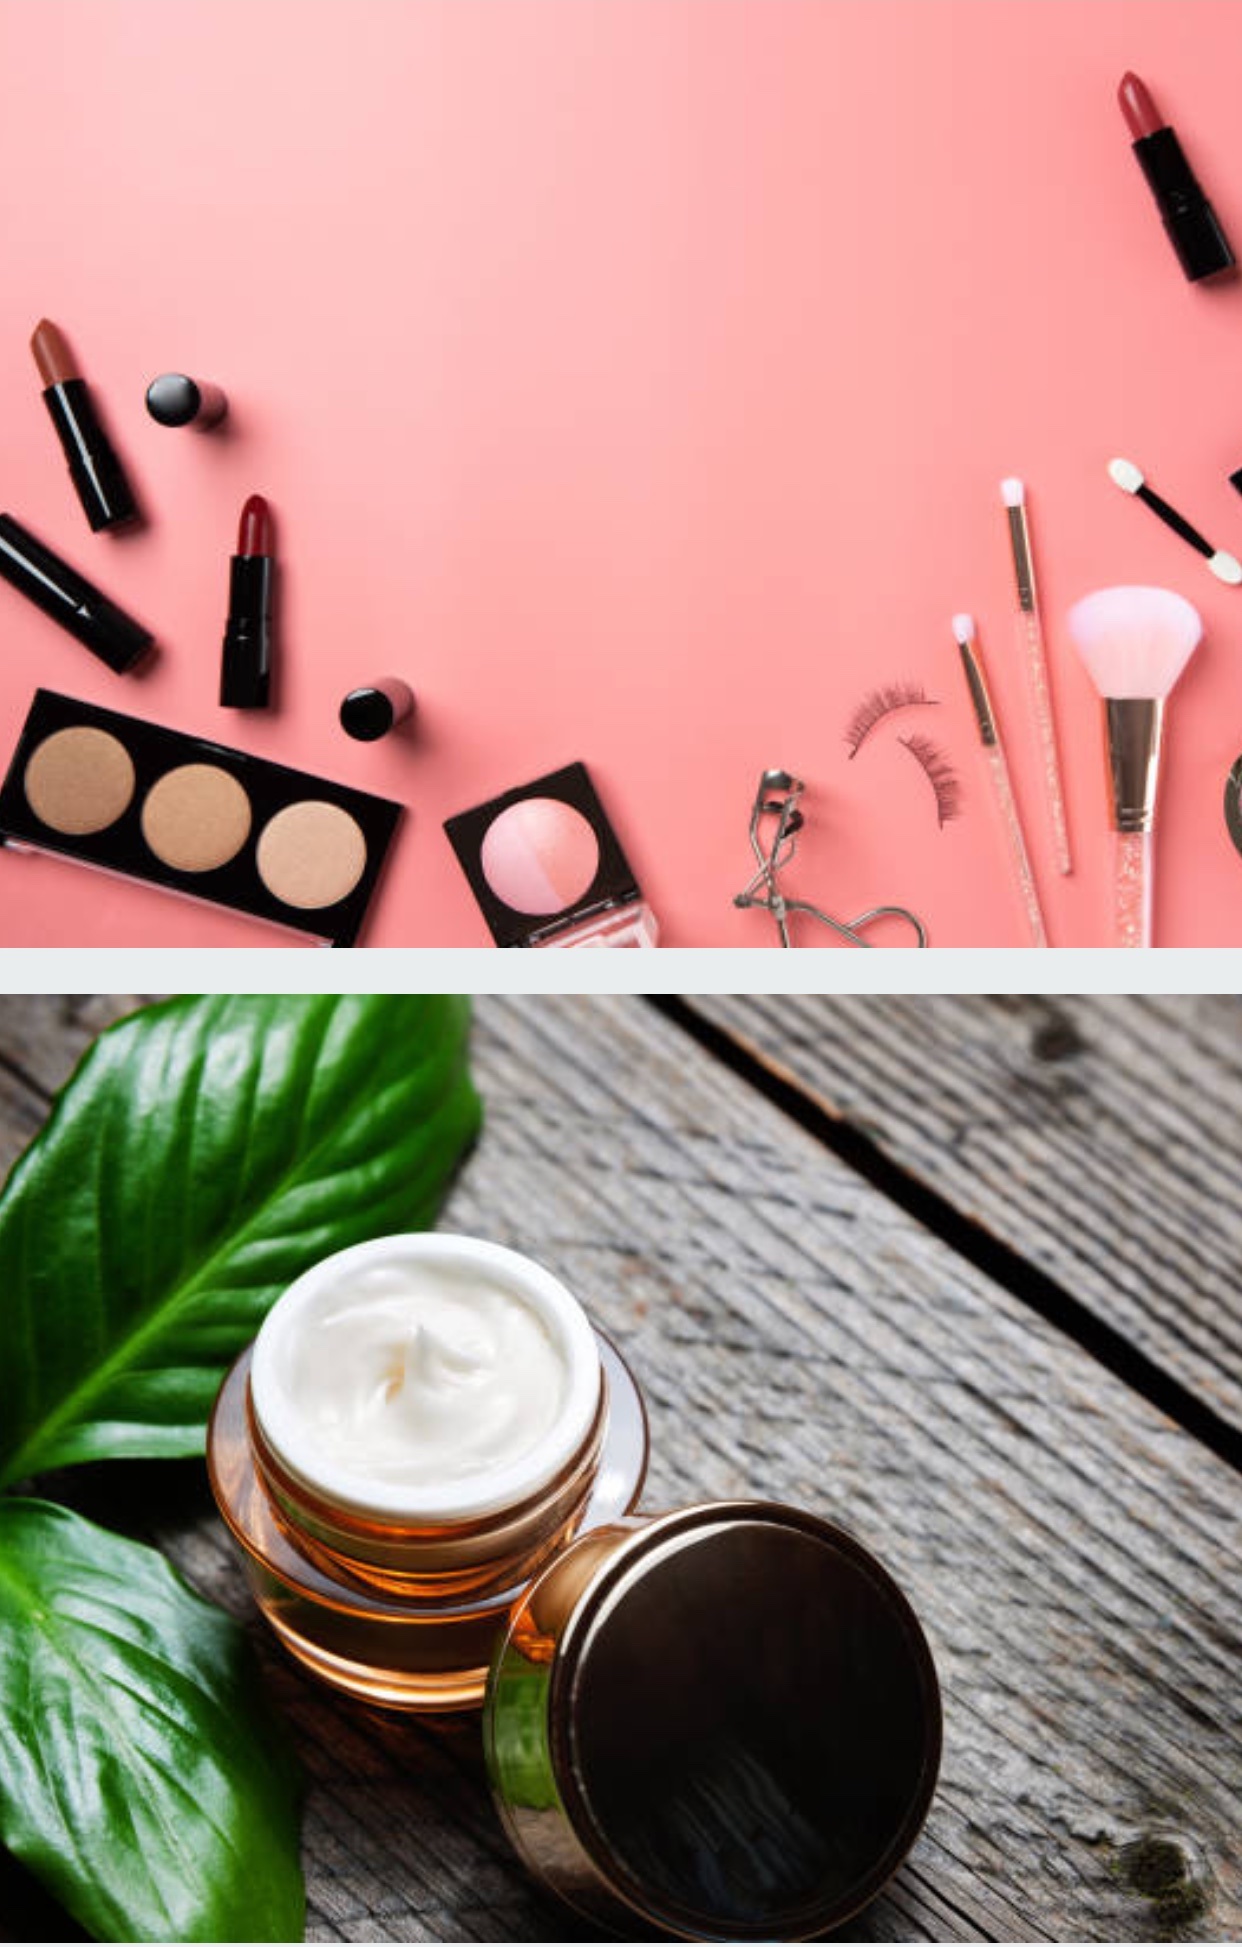 Buy Makeup Online | Buy Organic Makeup Cosmetics | Pircosmetics